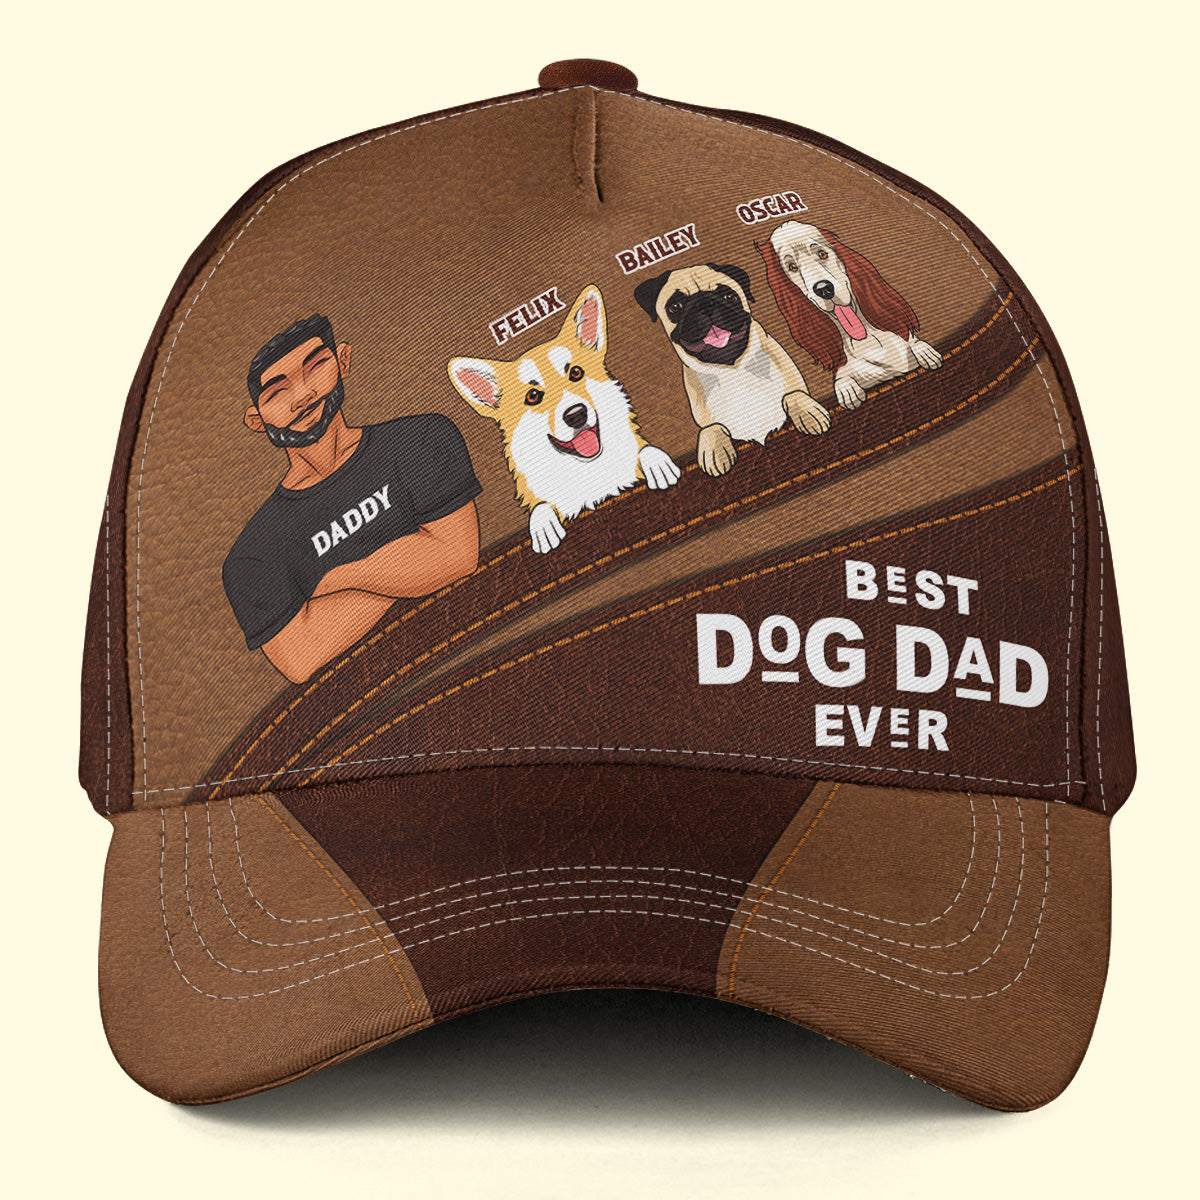 Dope Dog Dad - Personalized Custom Baseball Cap 3D